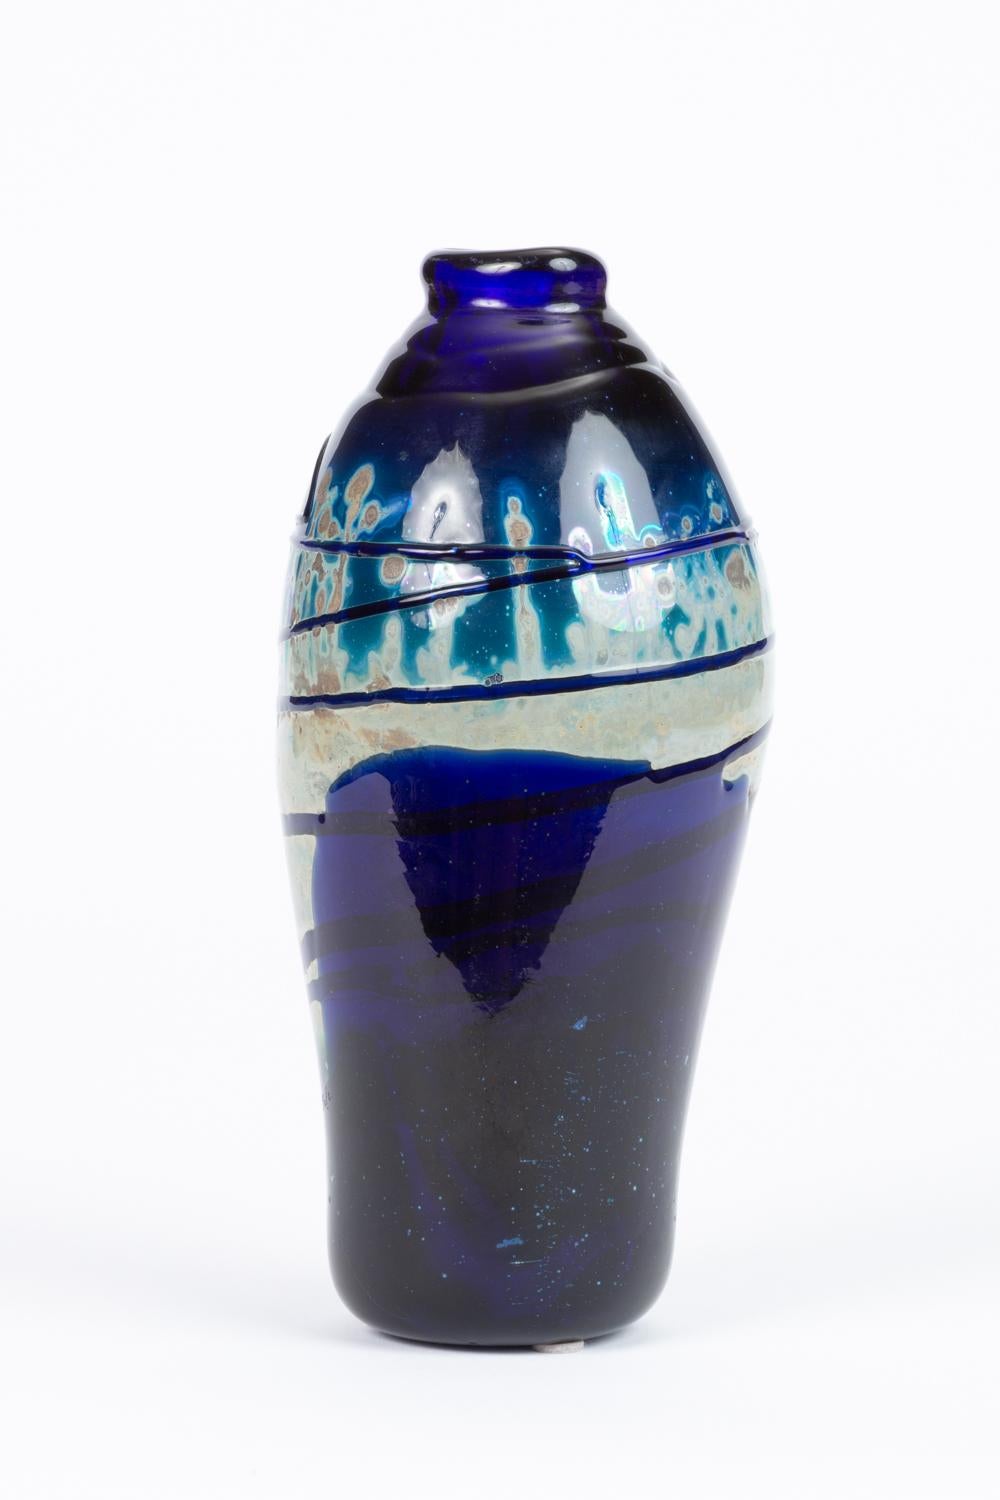 20th Century Hand Blown Art Glass Vase/Vessel with Striated Drip Finish